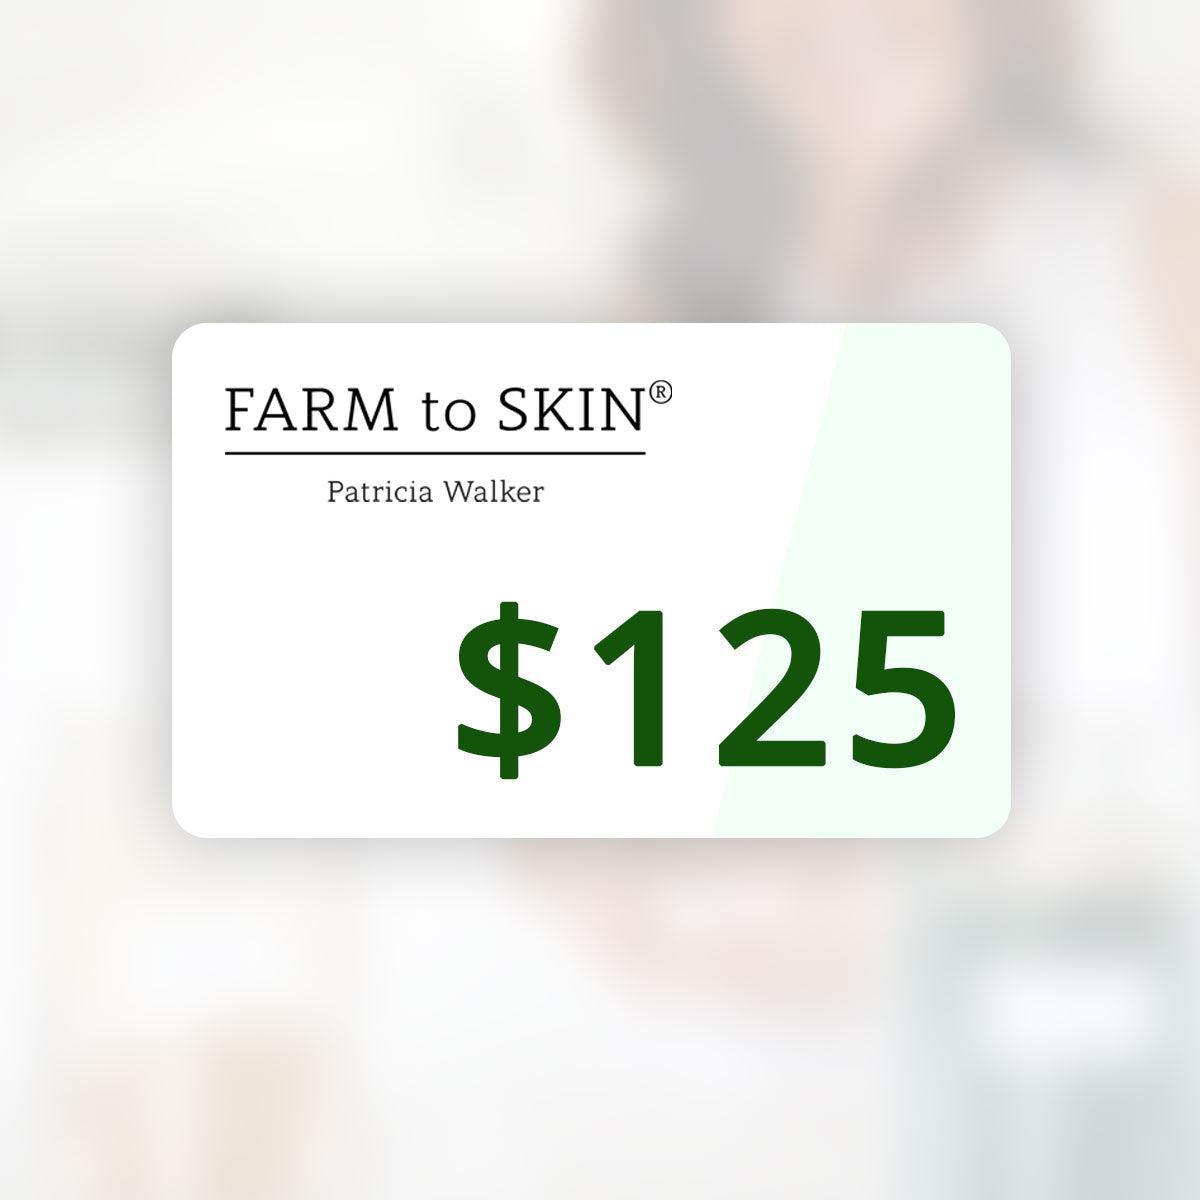 Farm To Skin Gift Card